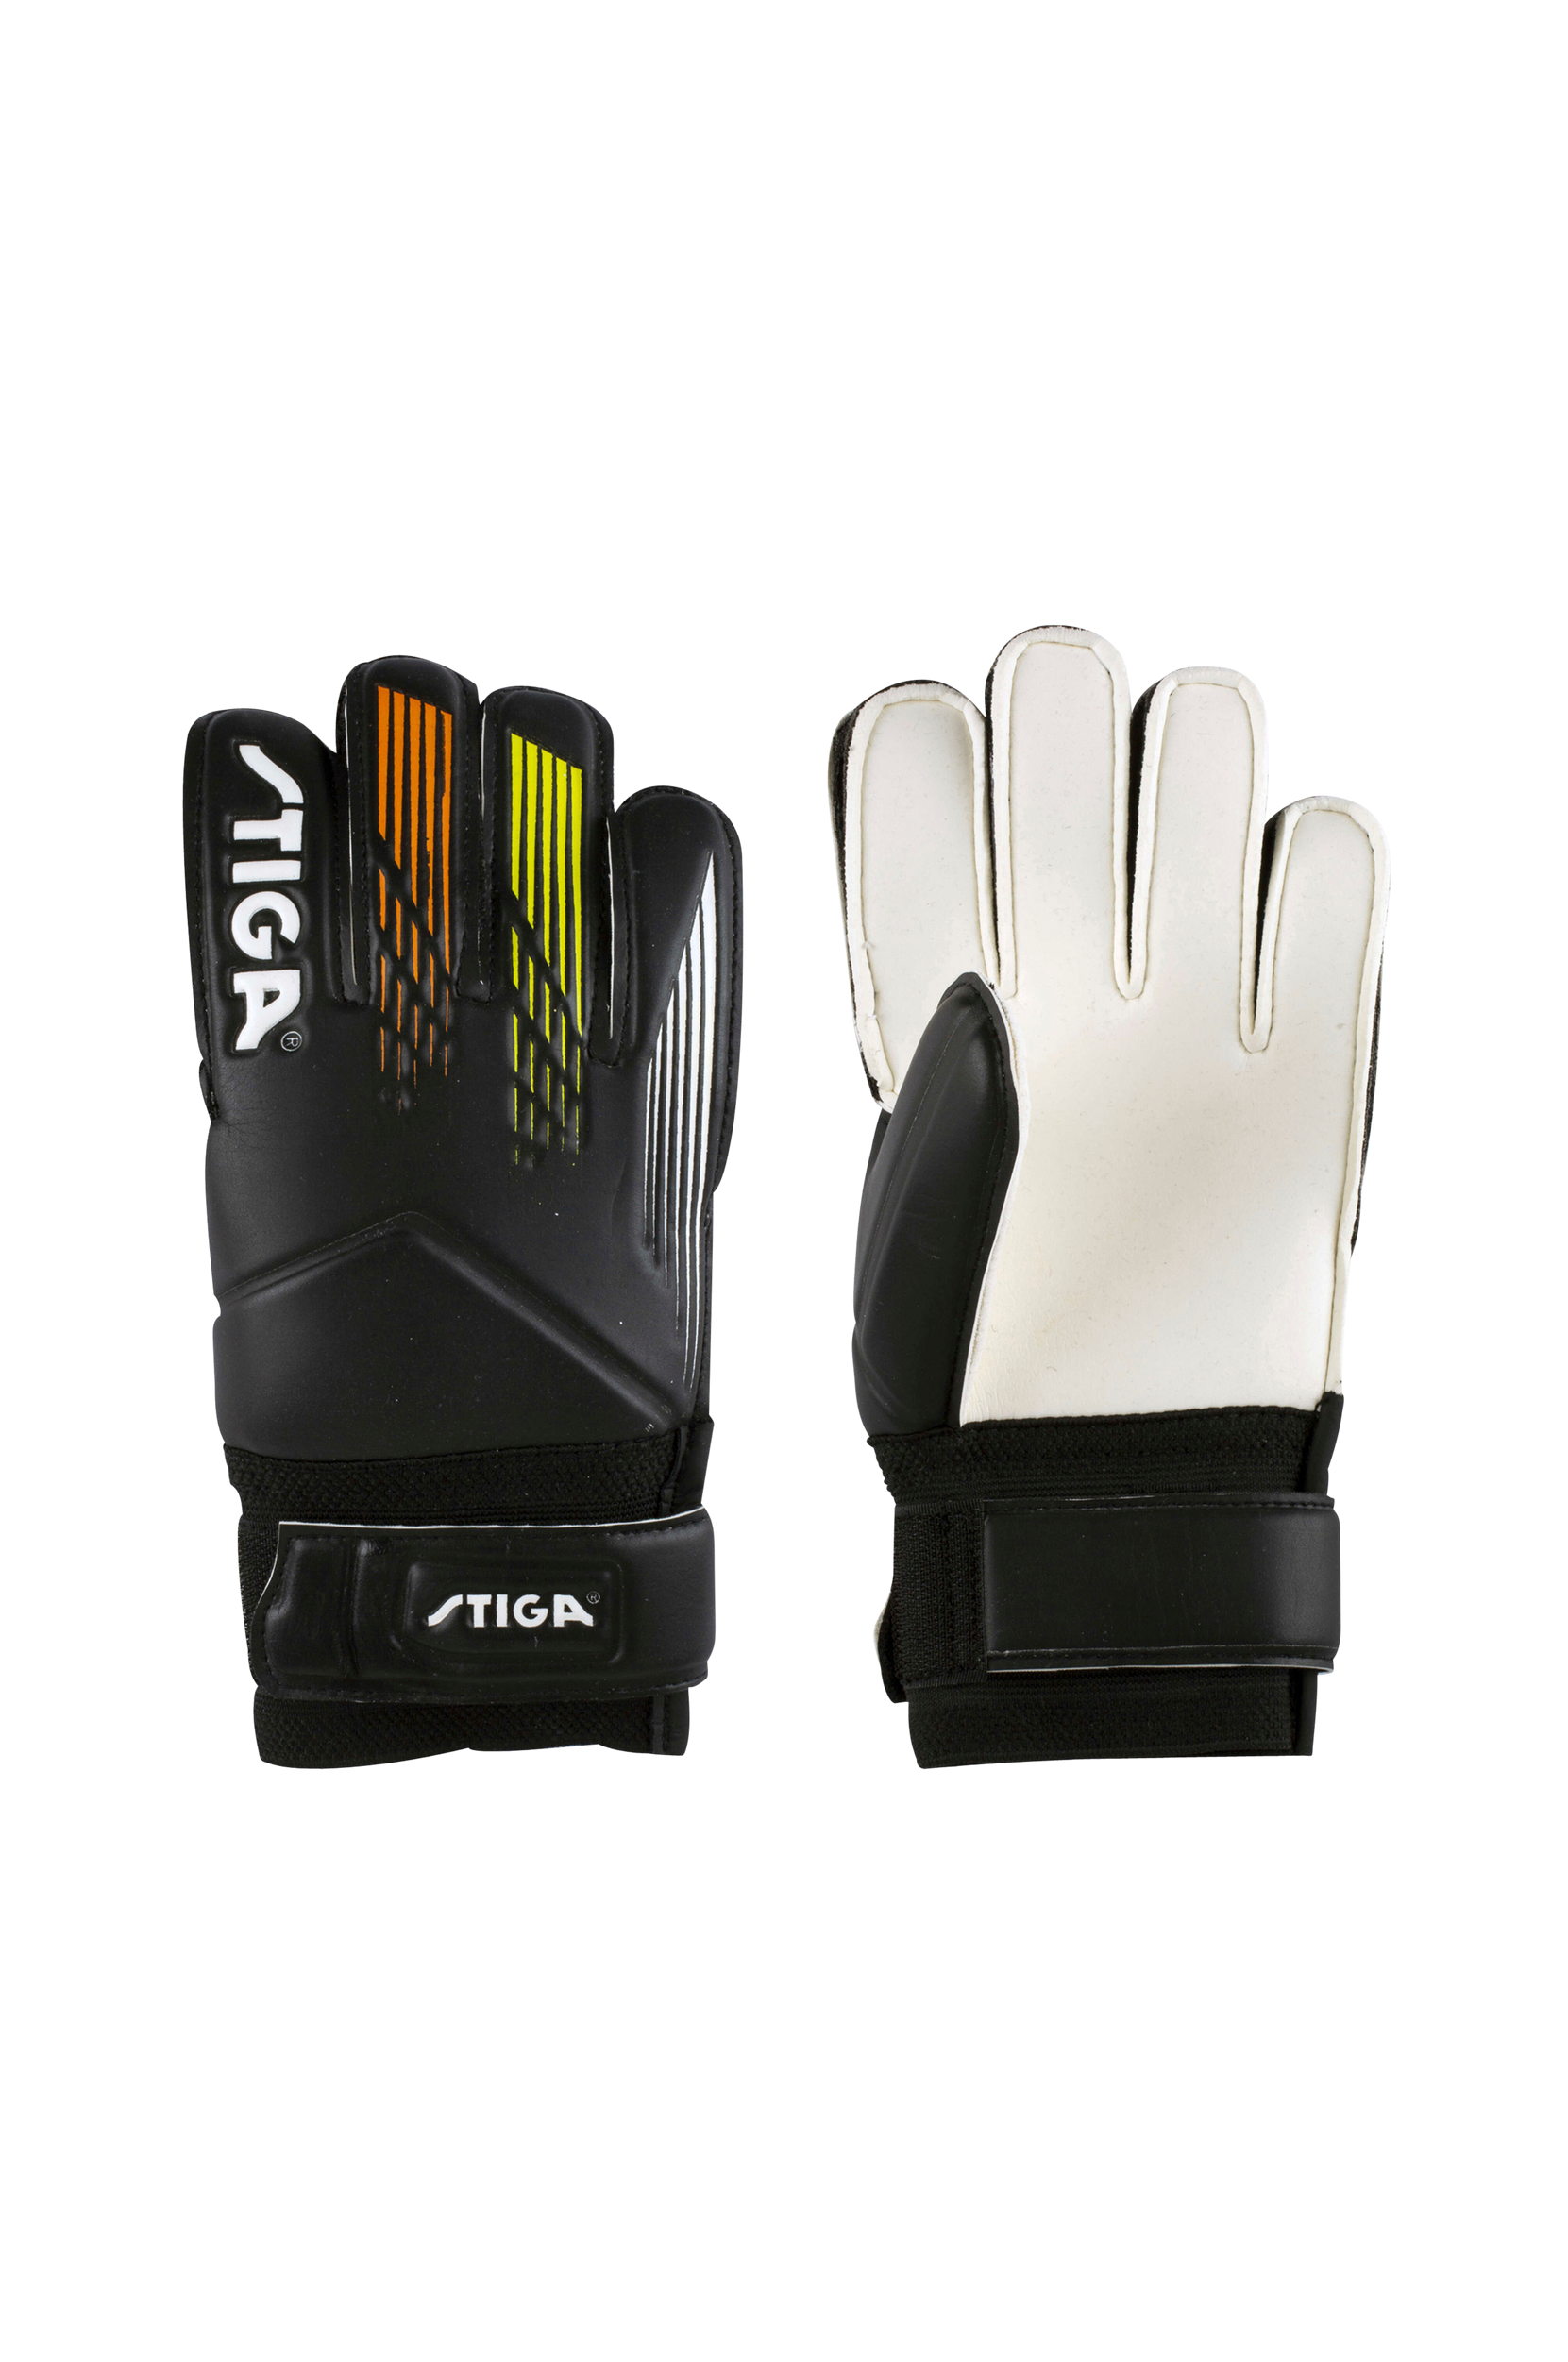 FB Goalkeeper Gloves Size 7, Stiga